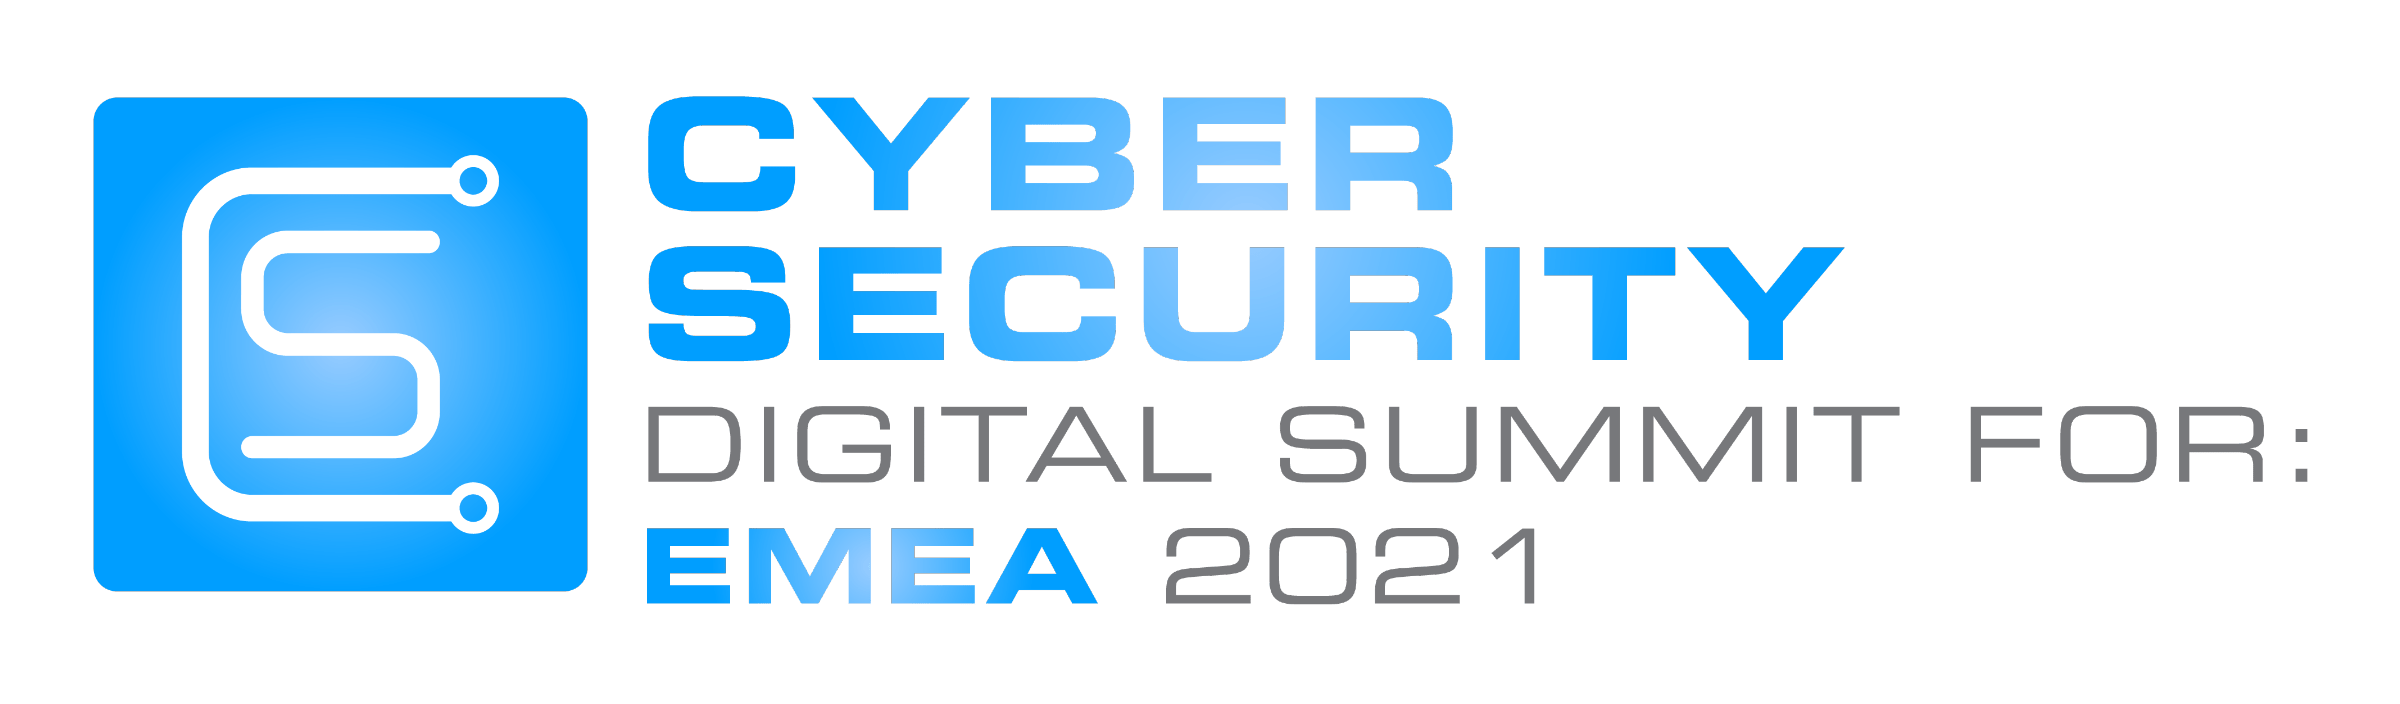 Cybersecurity Digital Summit for EMEA 2021